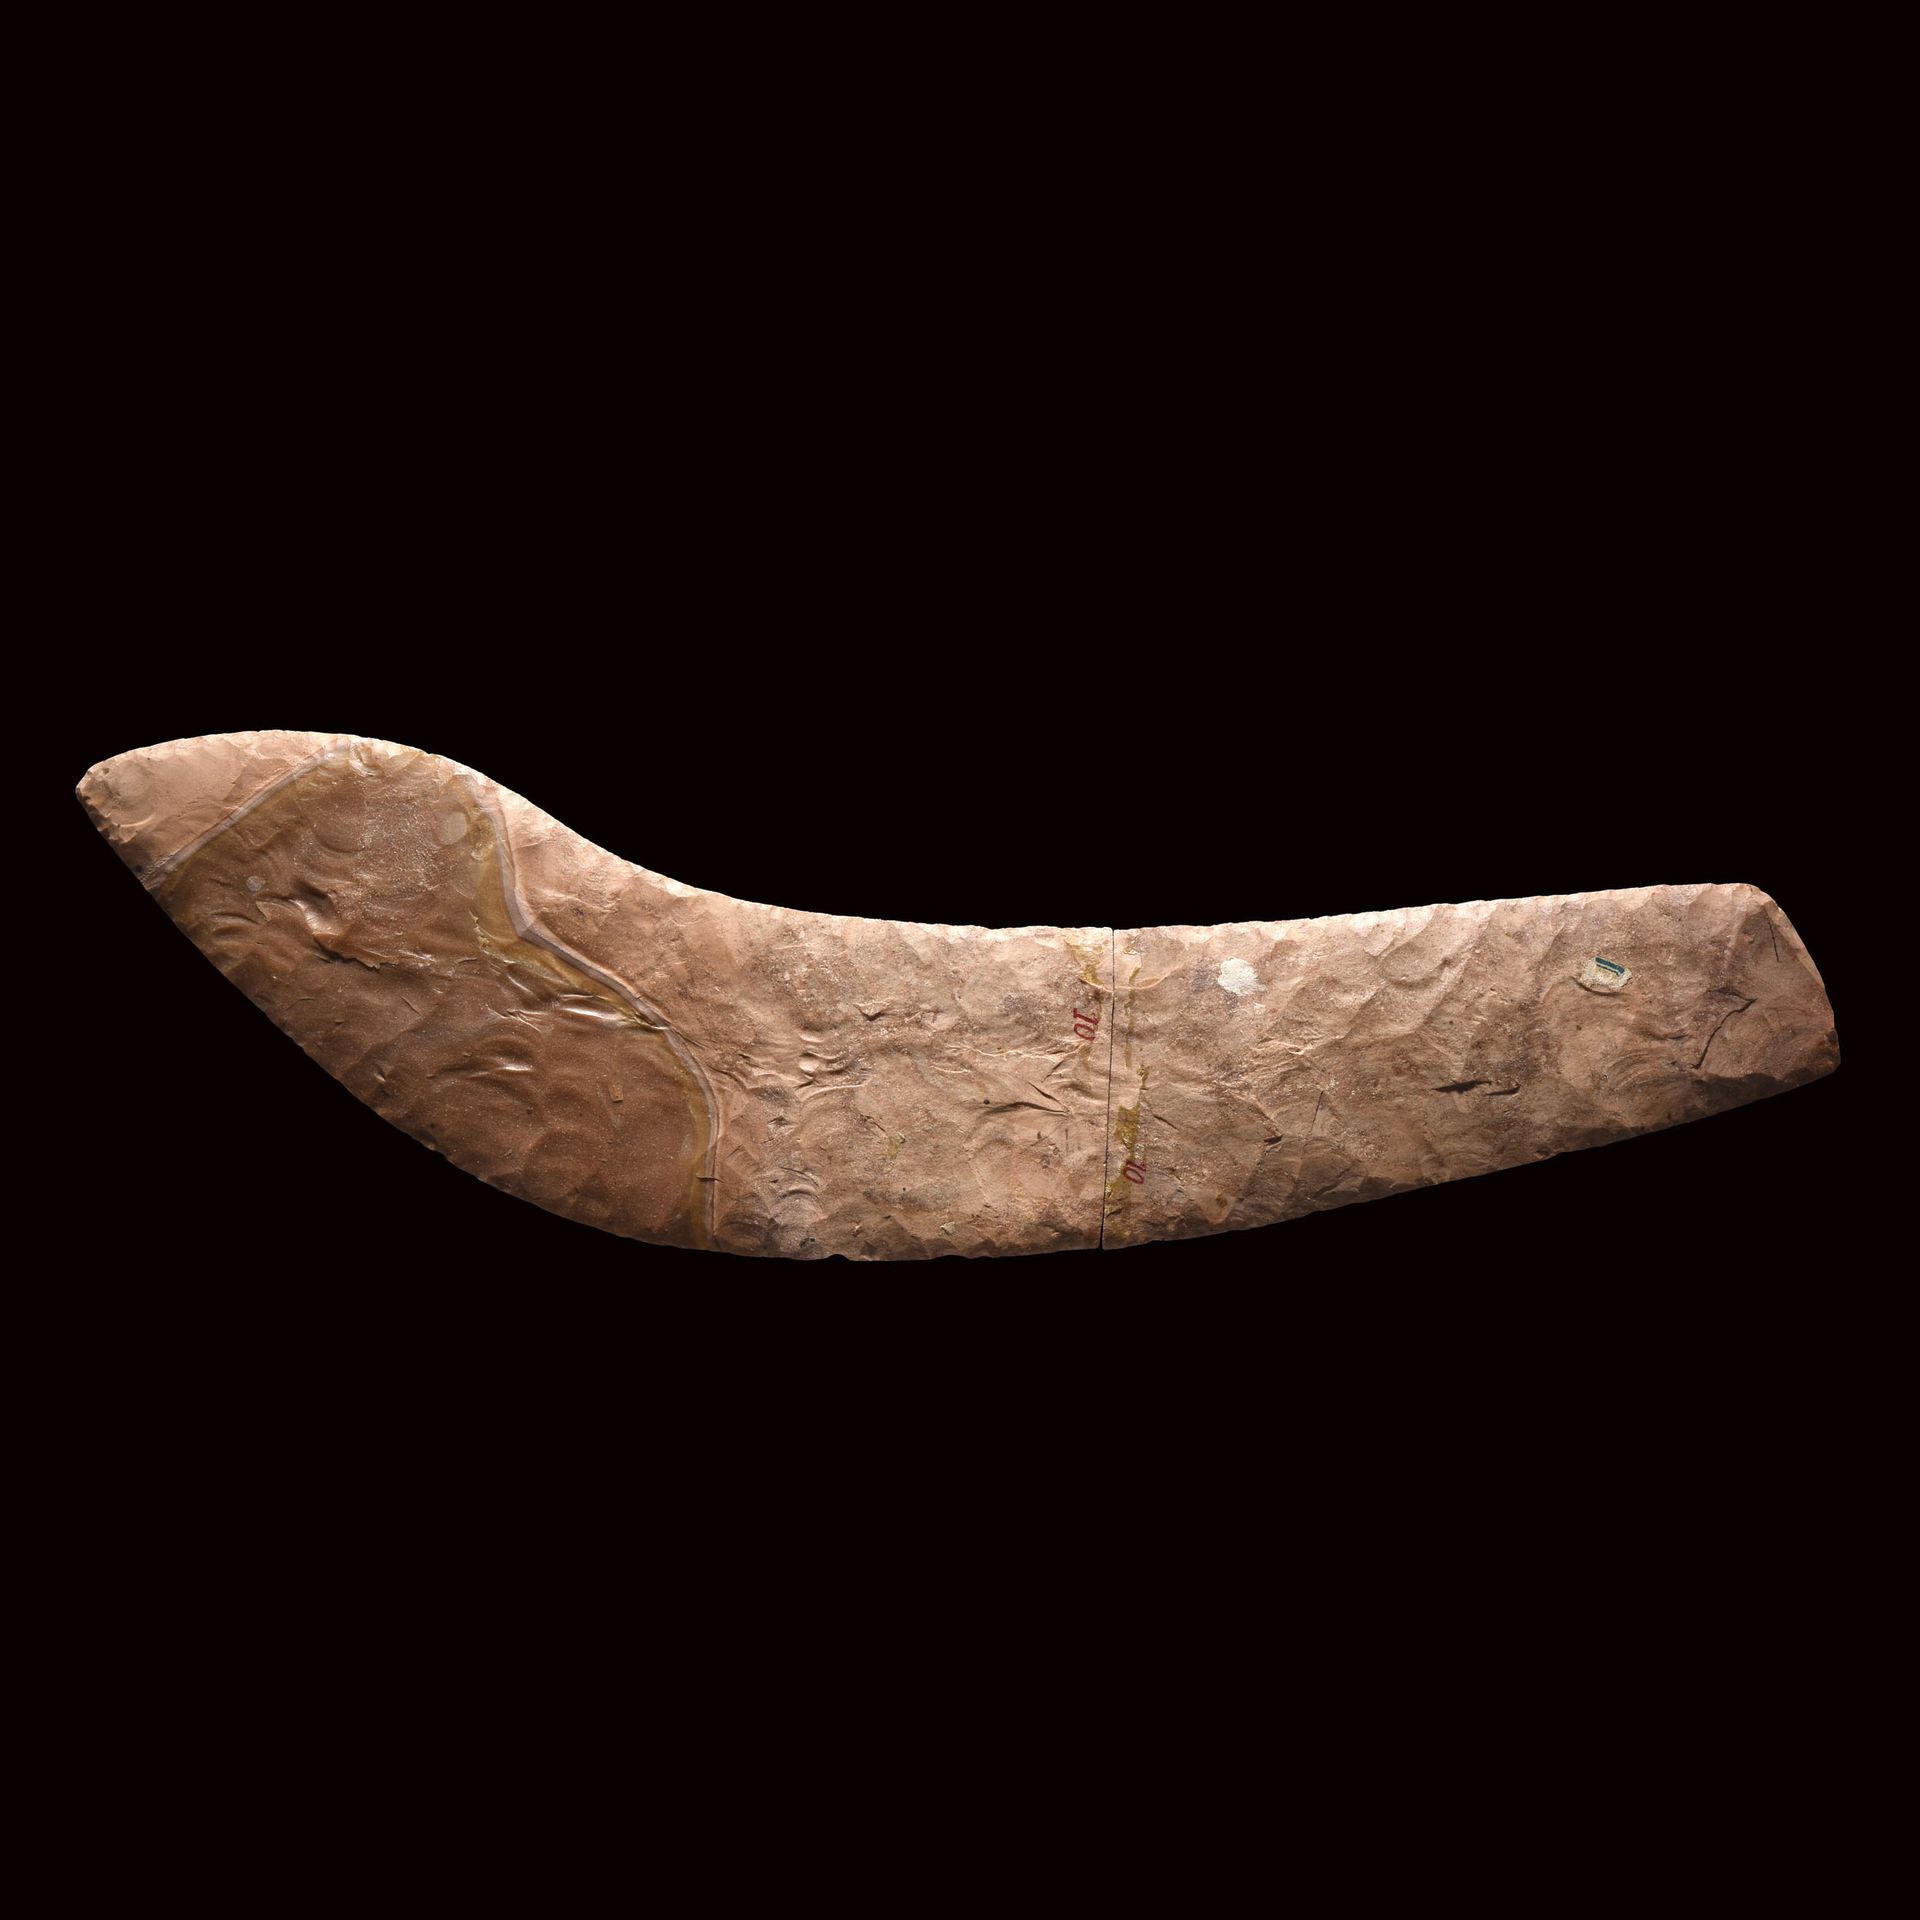 Null HOJA DE CUCHILLO

Egipto, Naqada III, c. 3200-3000 a.C. 

Flint. Se divide &hellip;